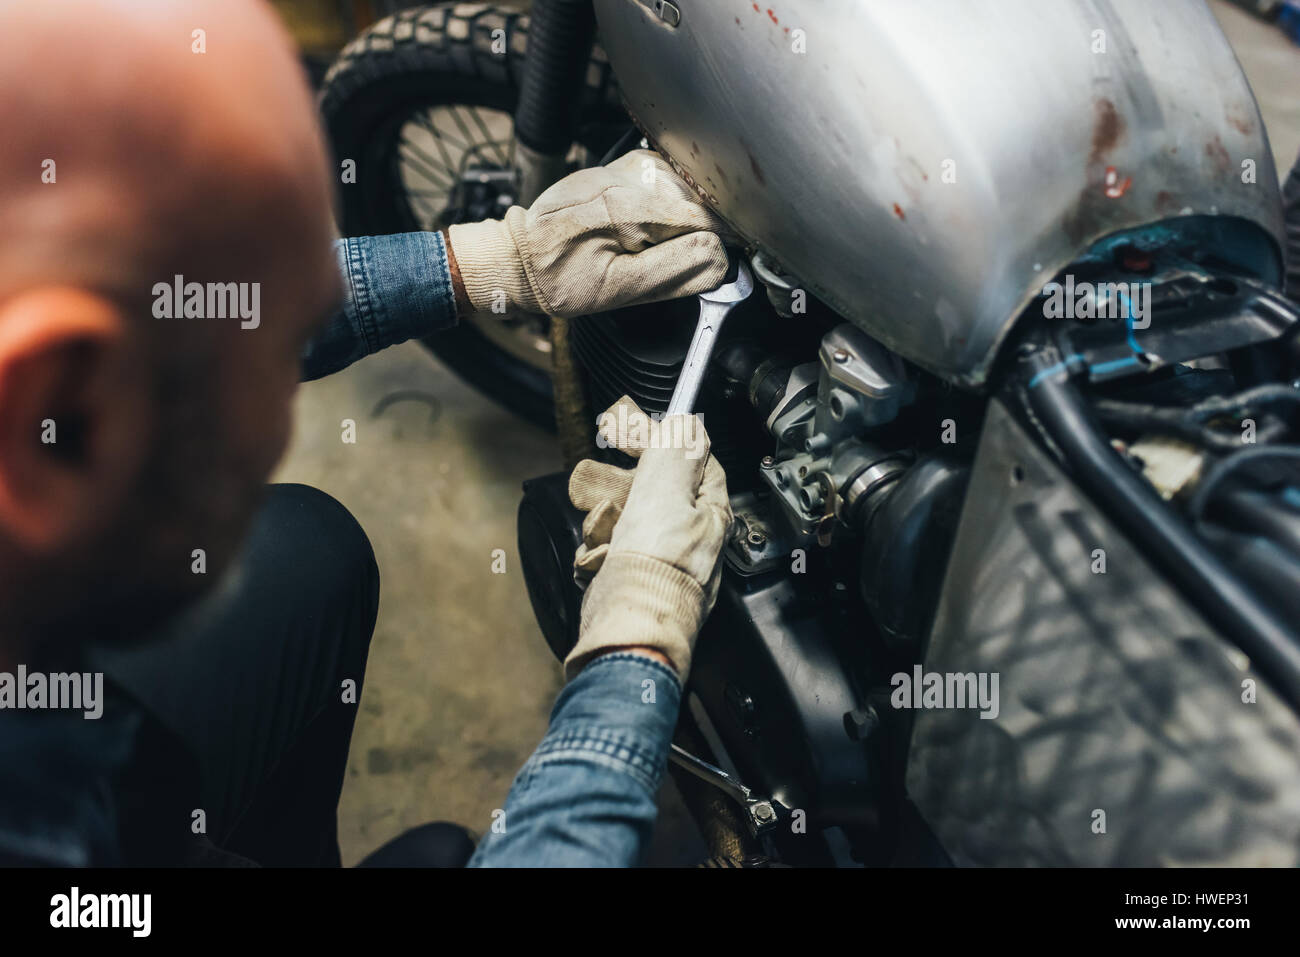 Mature man, working on motorcycle in garage Stock Photo